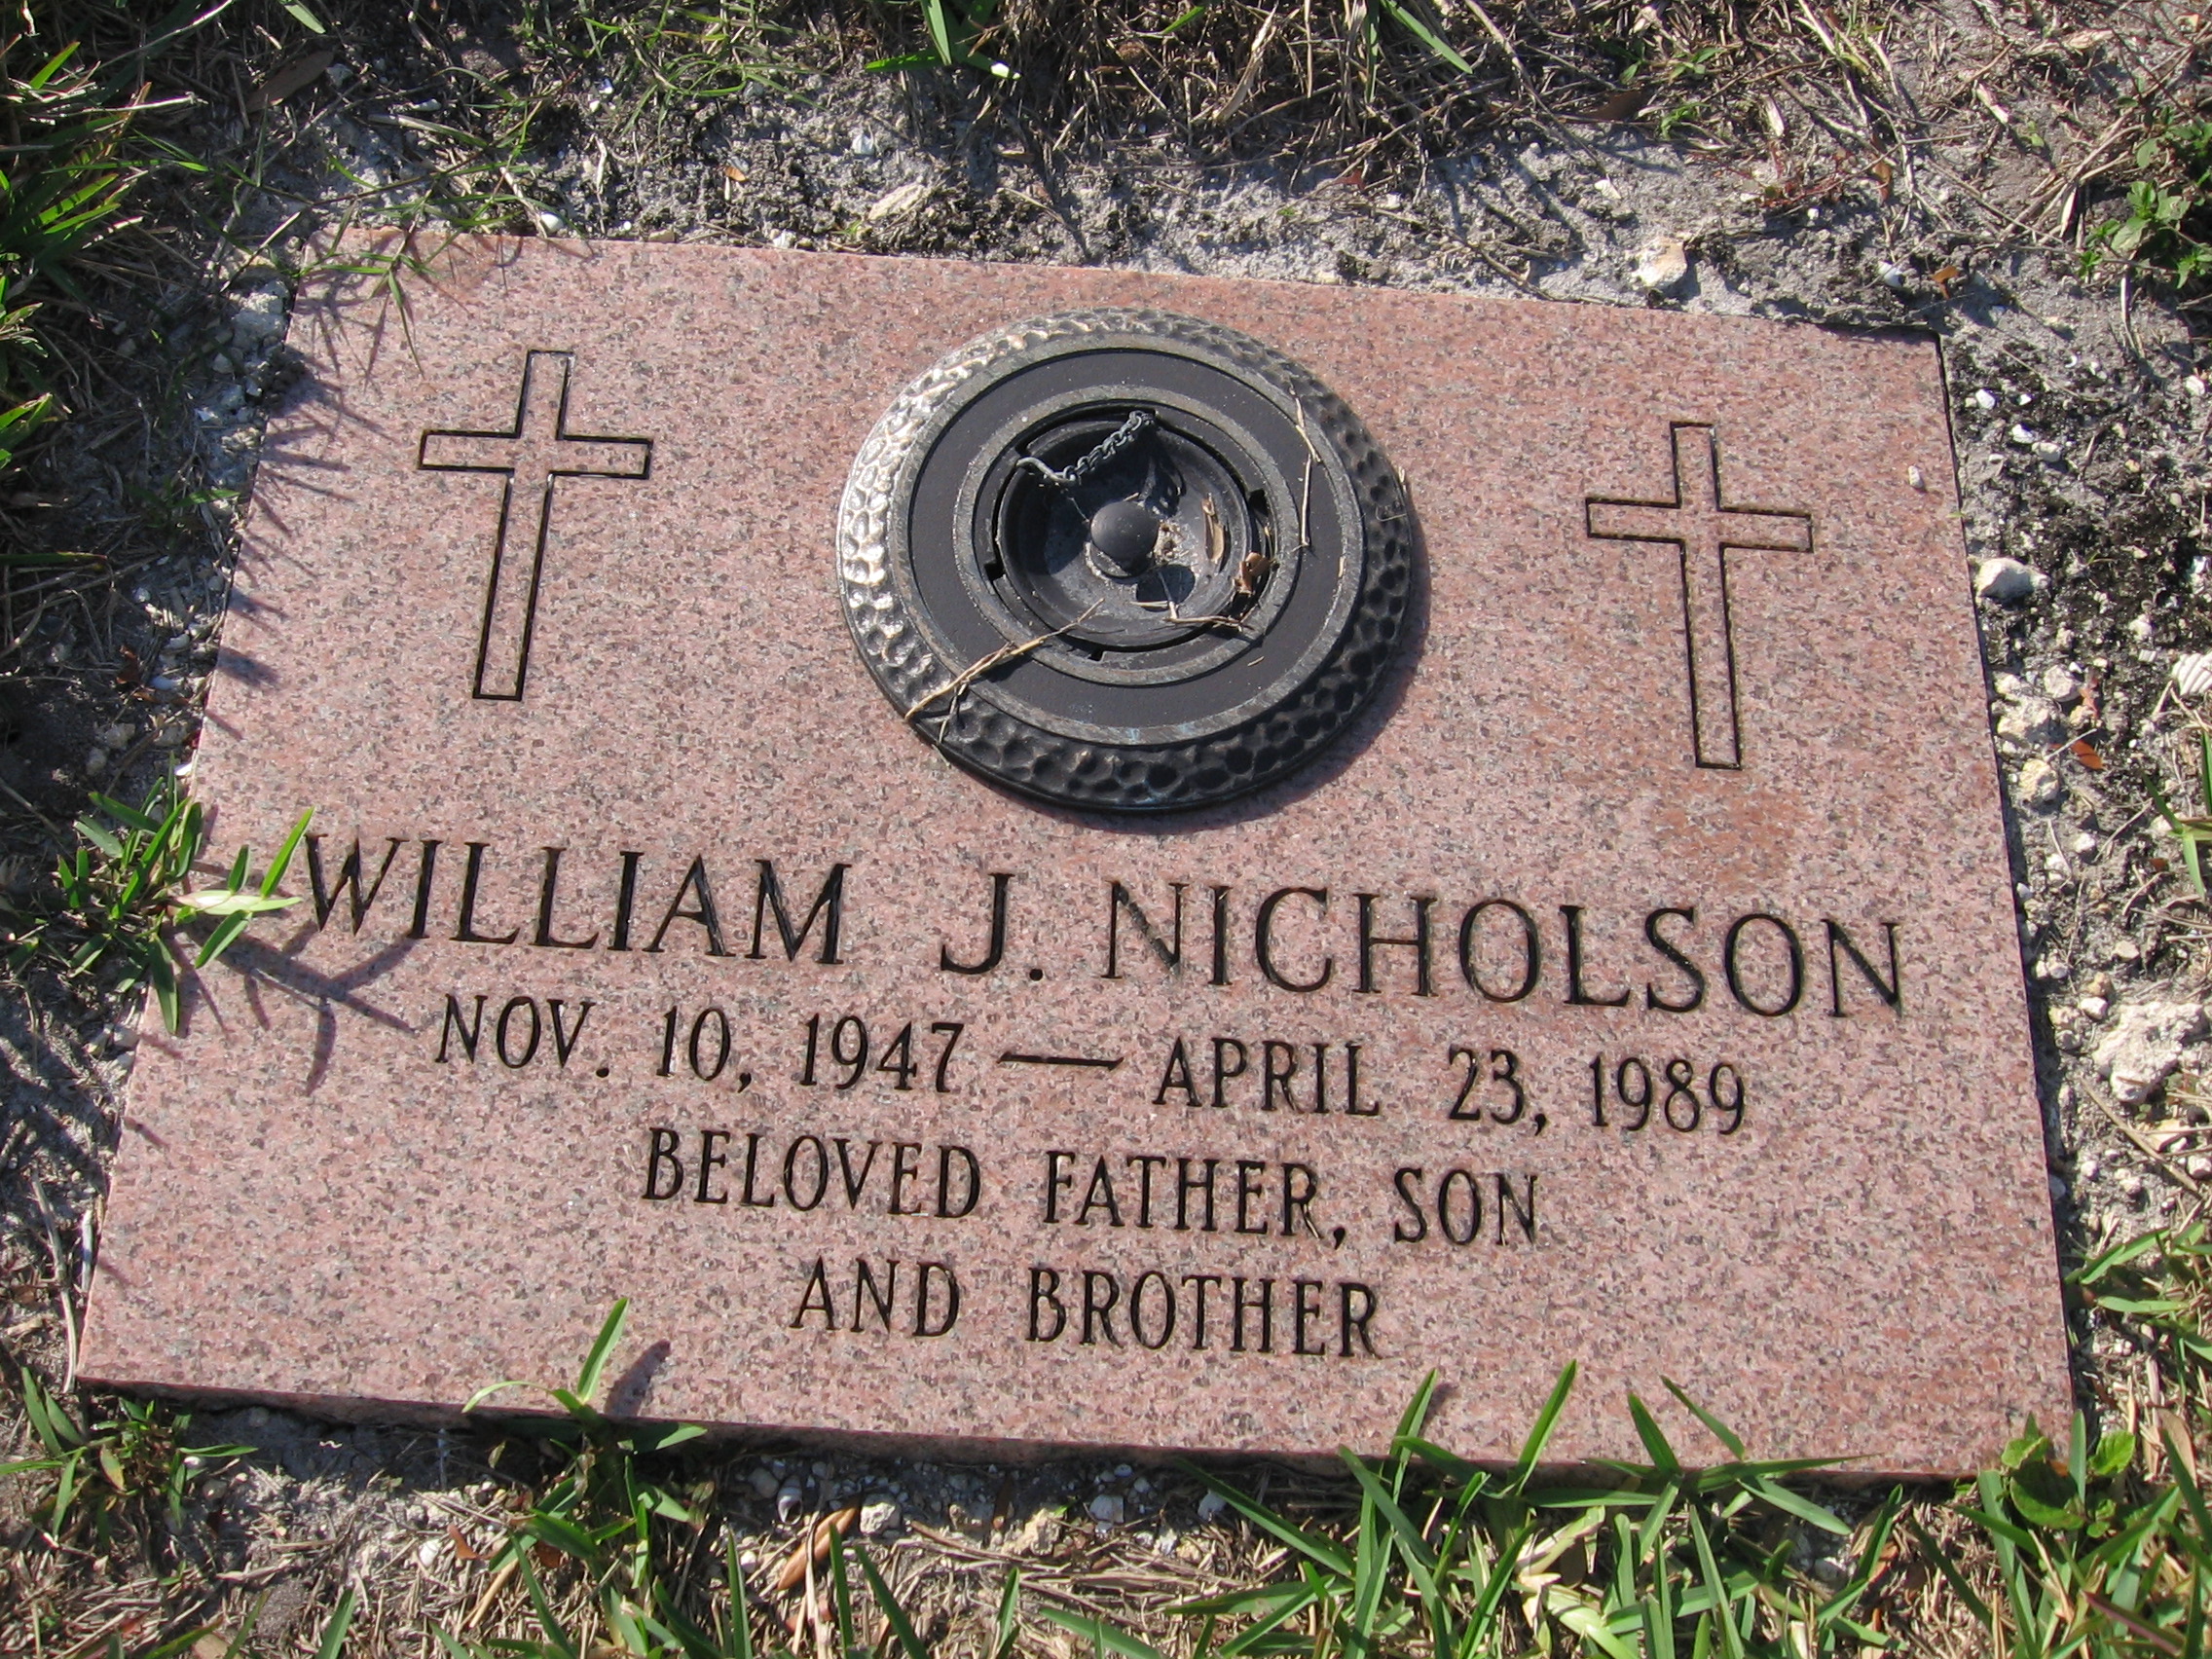 William J Nicholson